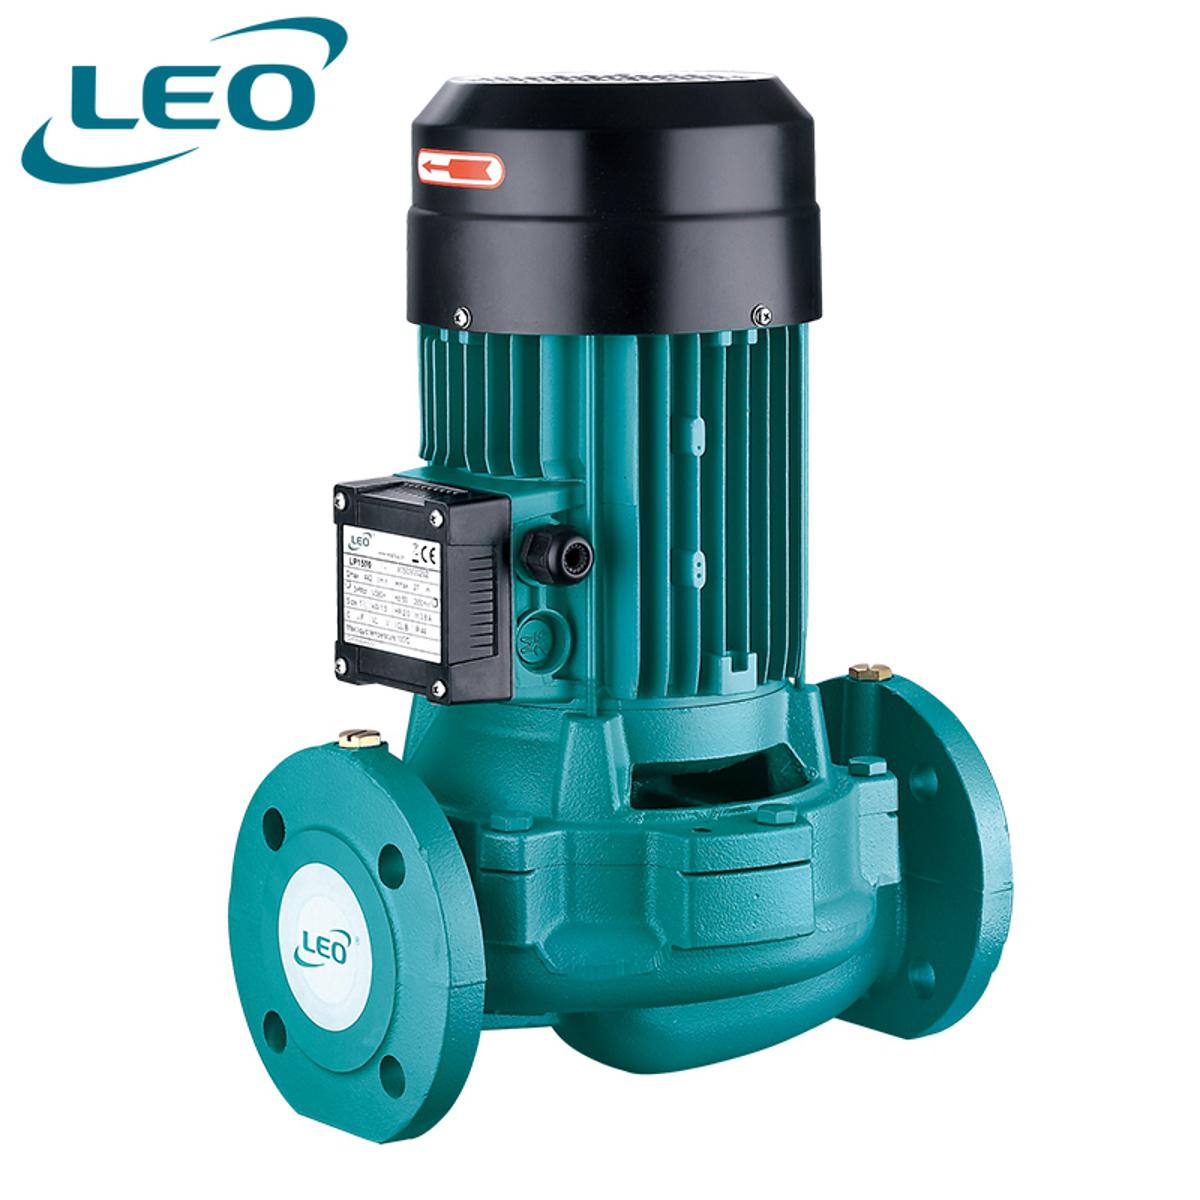 LEO - LP-2200 - 2200 W - 3.0 HP-  HOT Water INLINE Booster Pump - SIZE 2" X 2" - European STANDARD